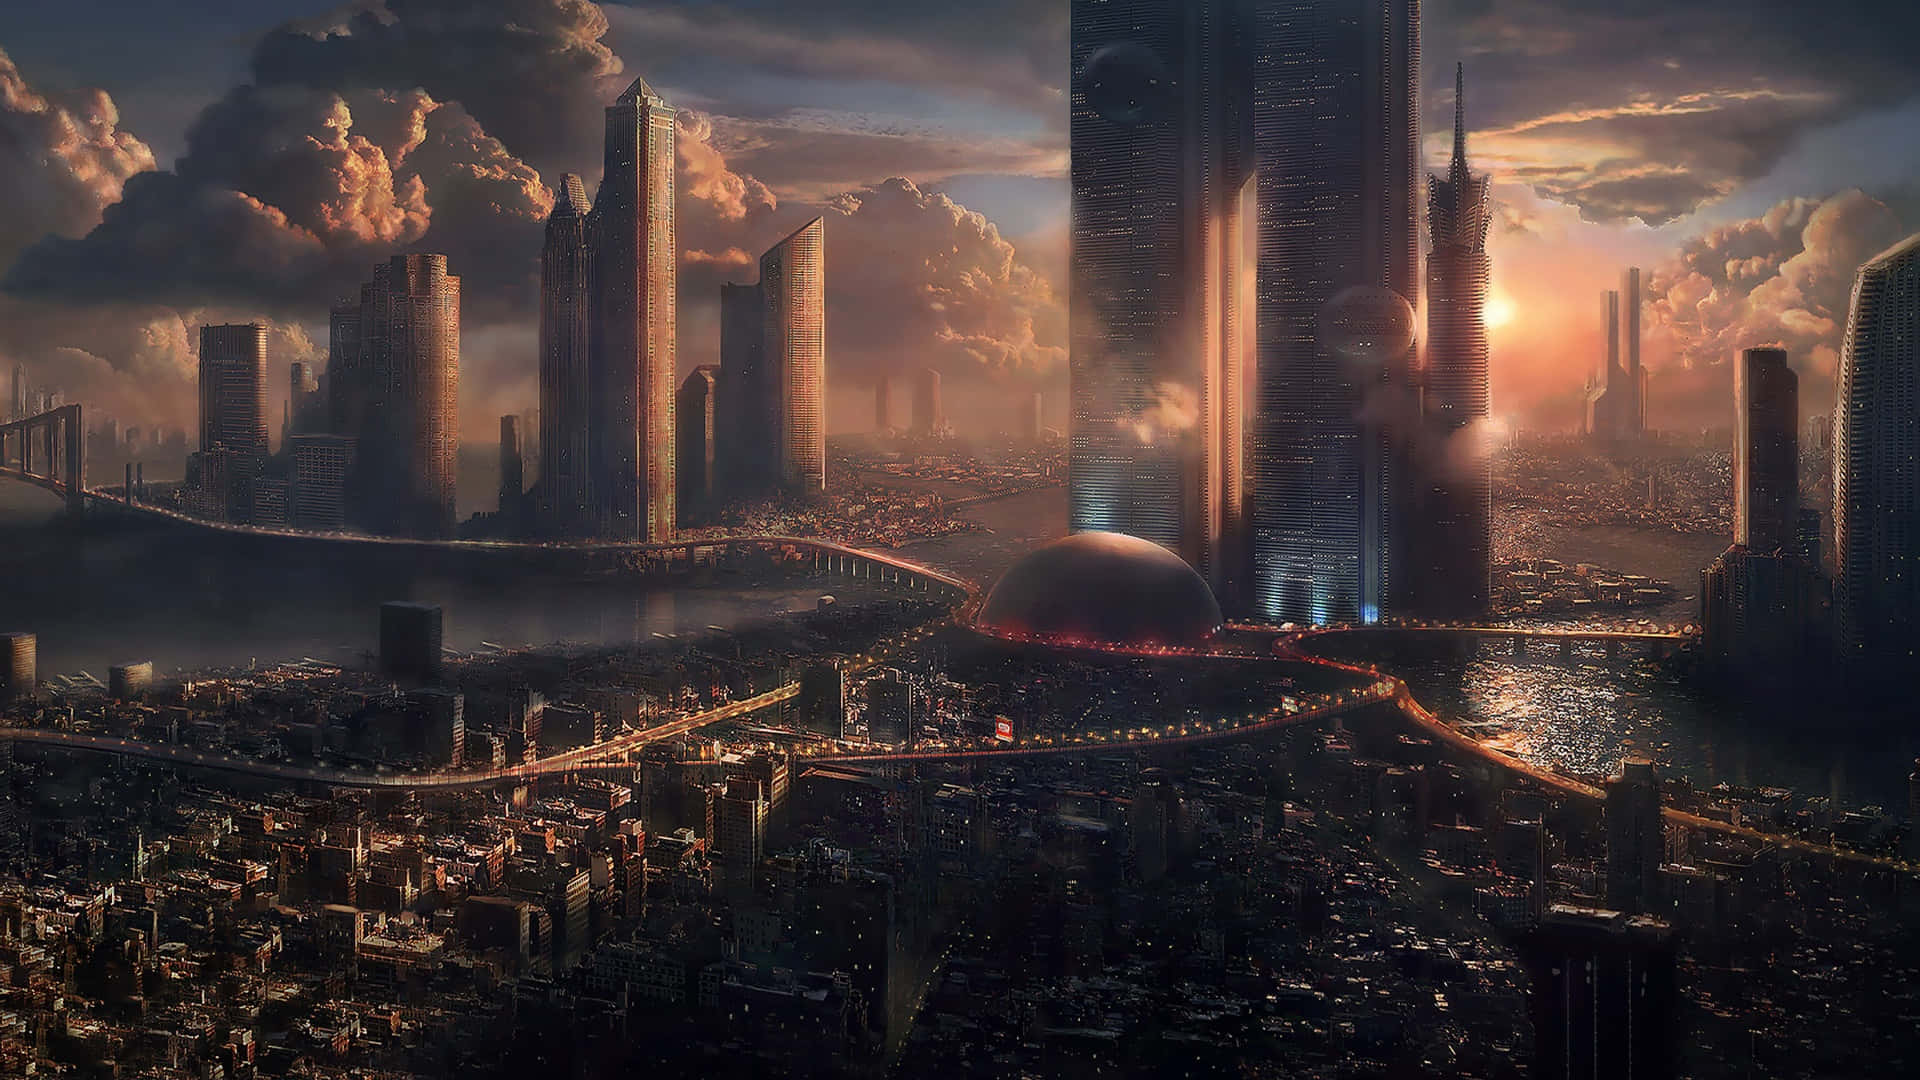 Exploring the Futuristic City of the Future